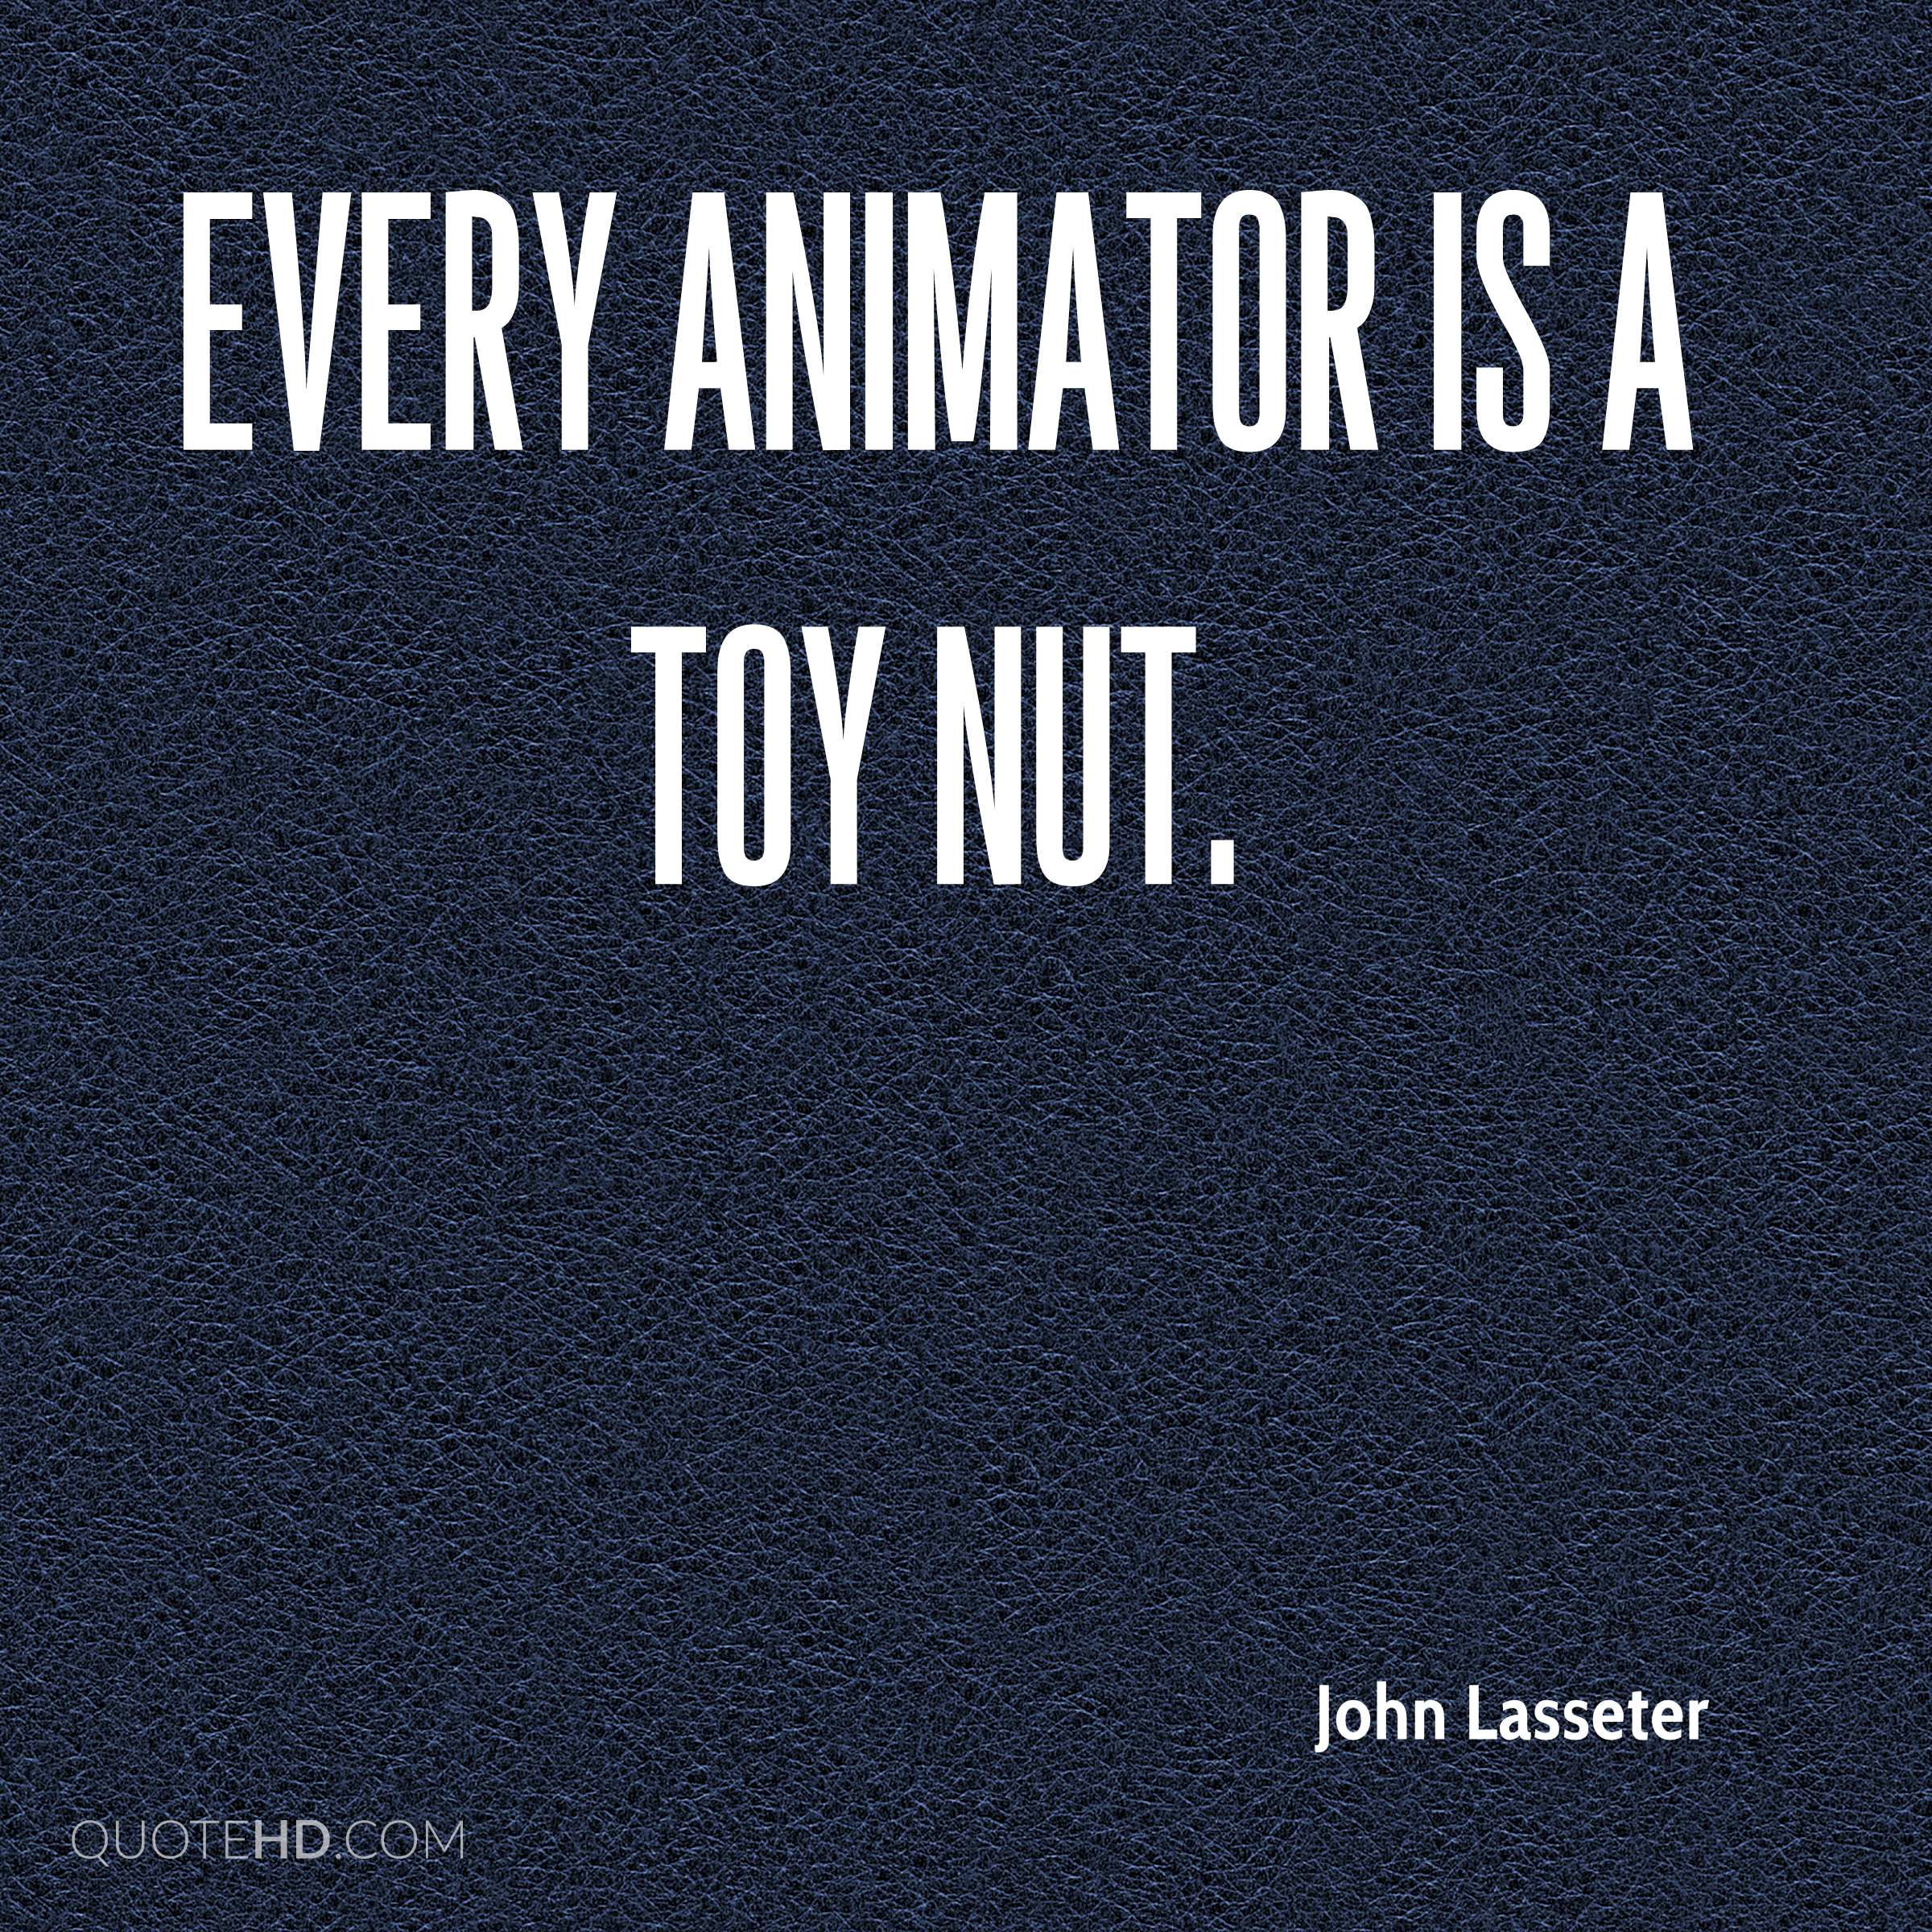 every animator is a toy nut. john lasseter